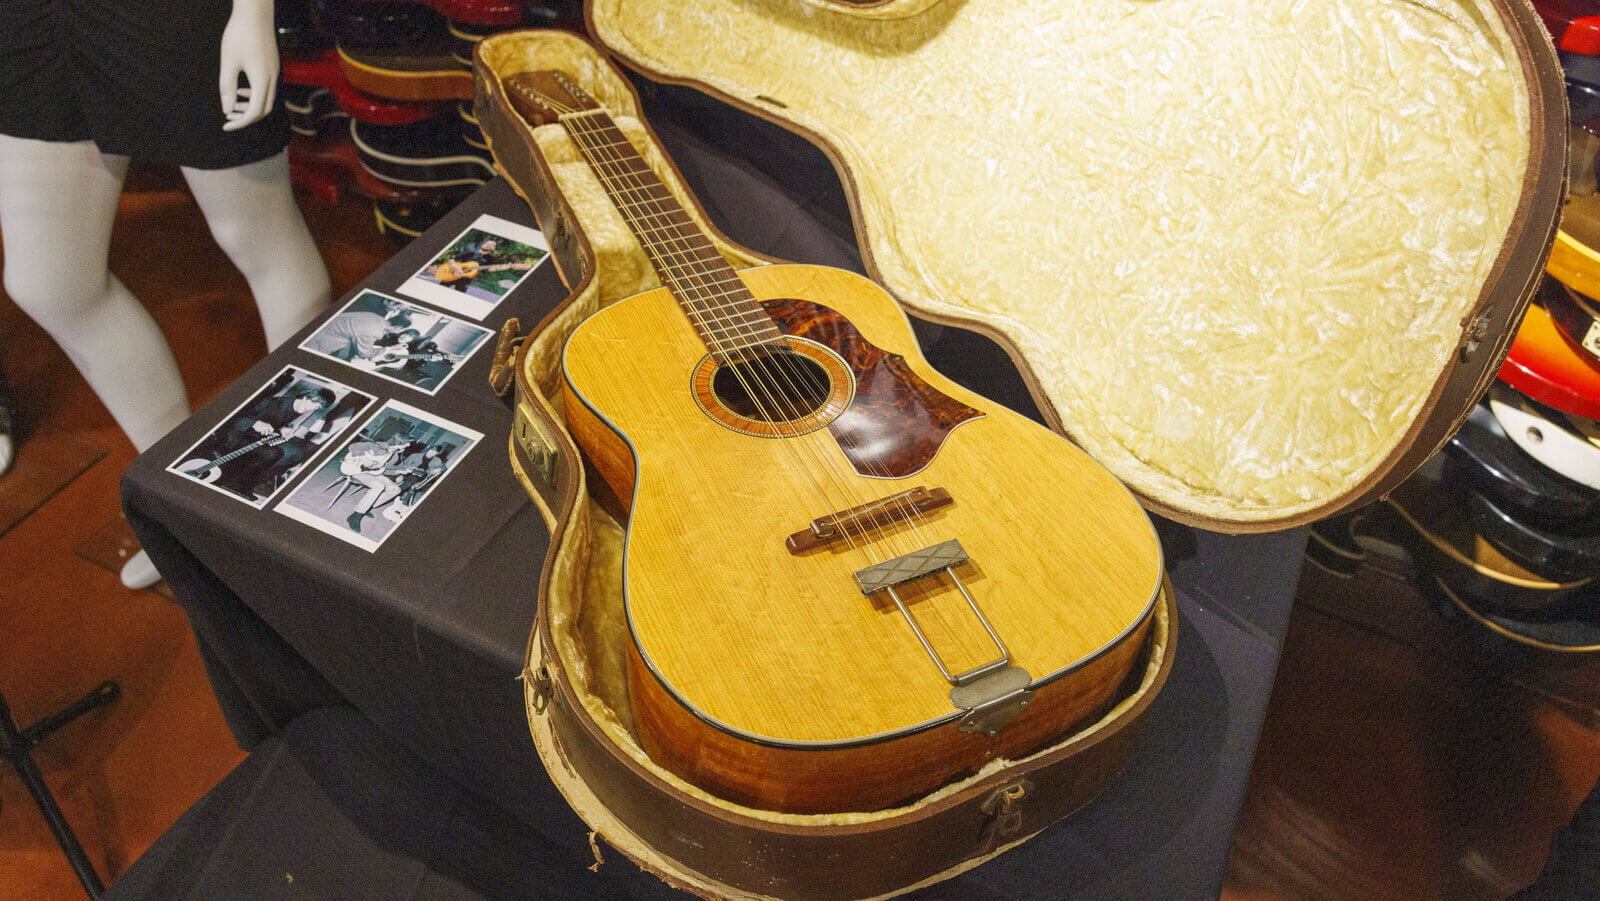 Subastan a un precio récord la guitarra perdida de Lennon